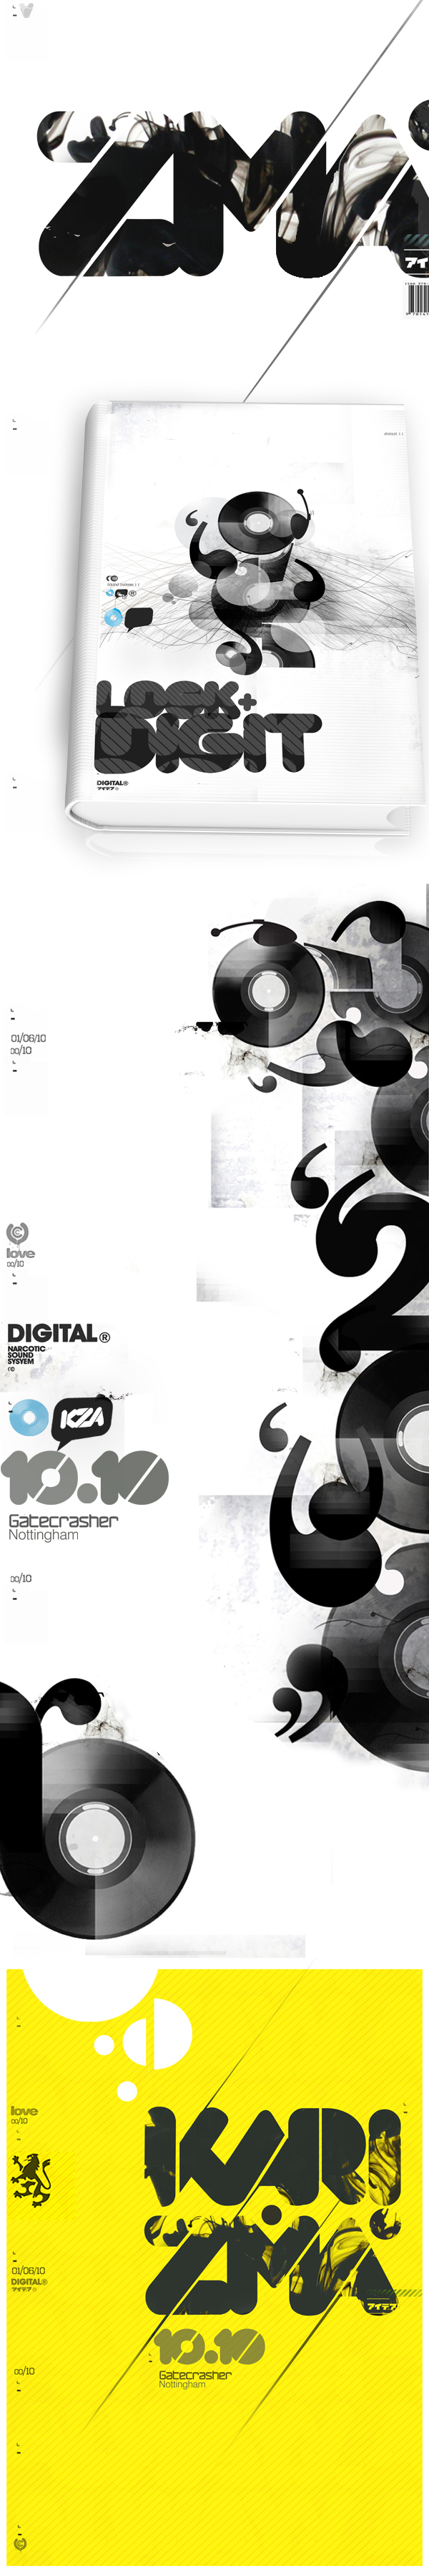 Promotional karizma music industry flyers logo club digital